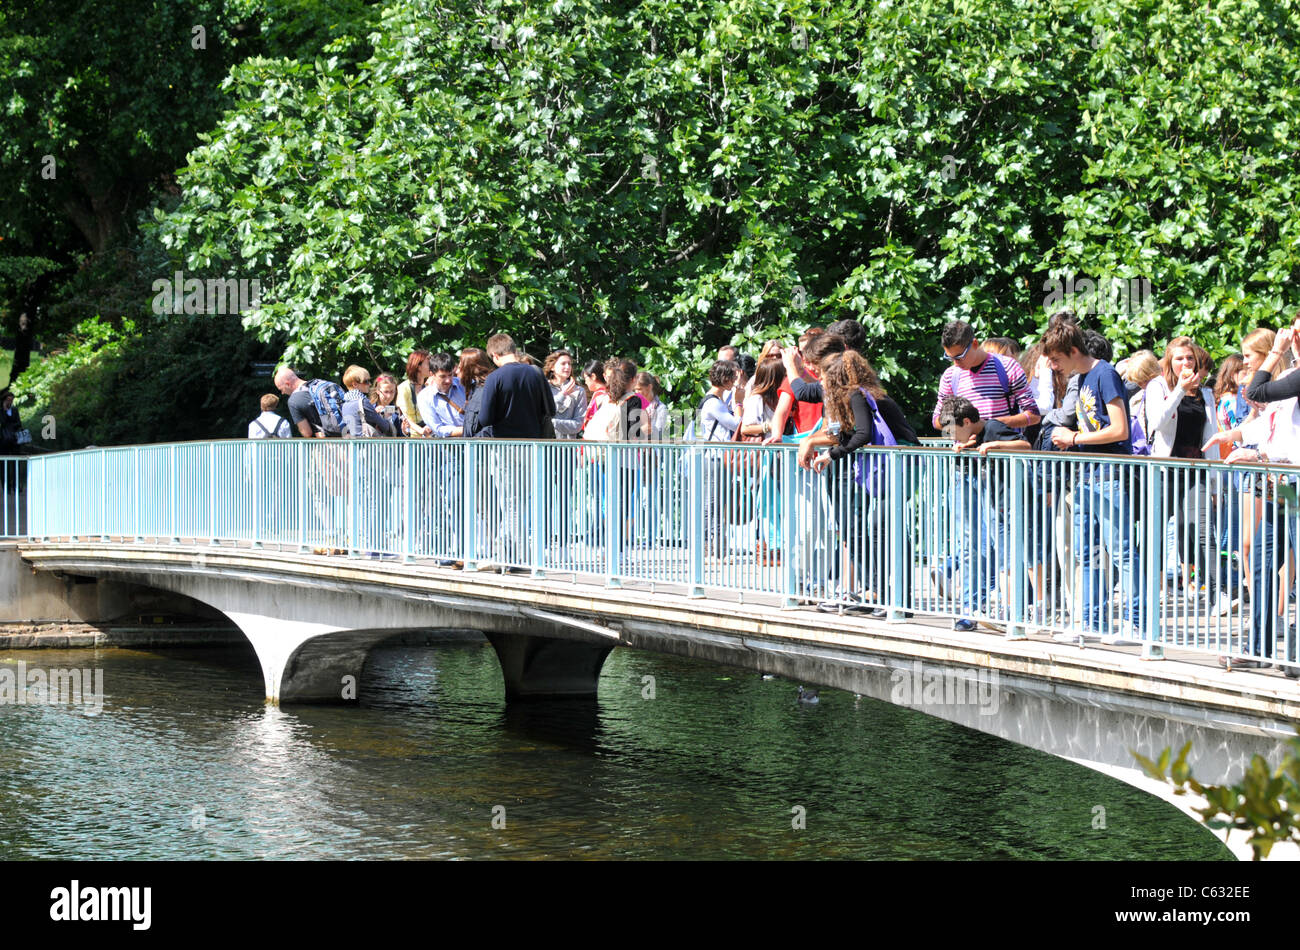 St. James's Park Bridge, The Blue Bridge, London, Britain, UK Stock Photo